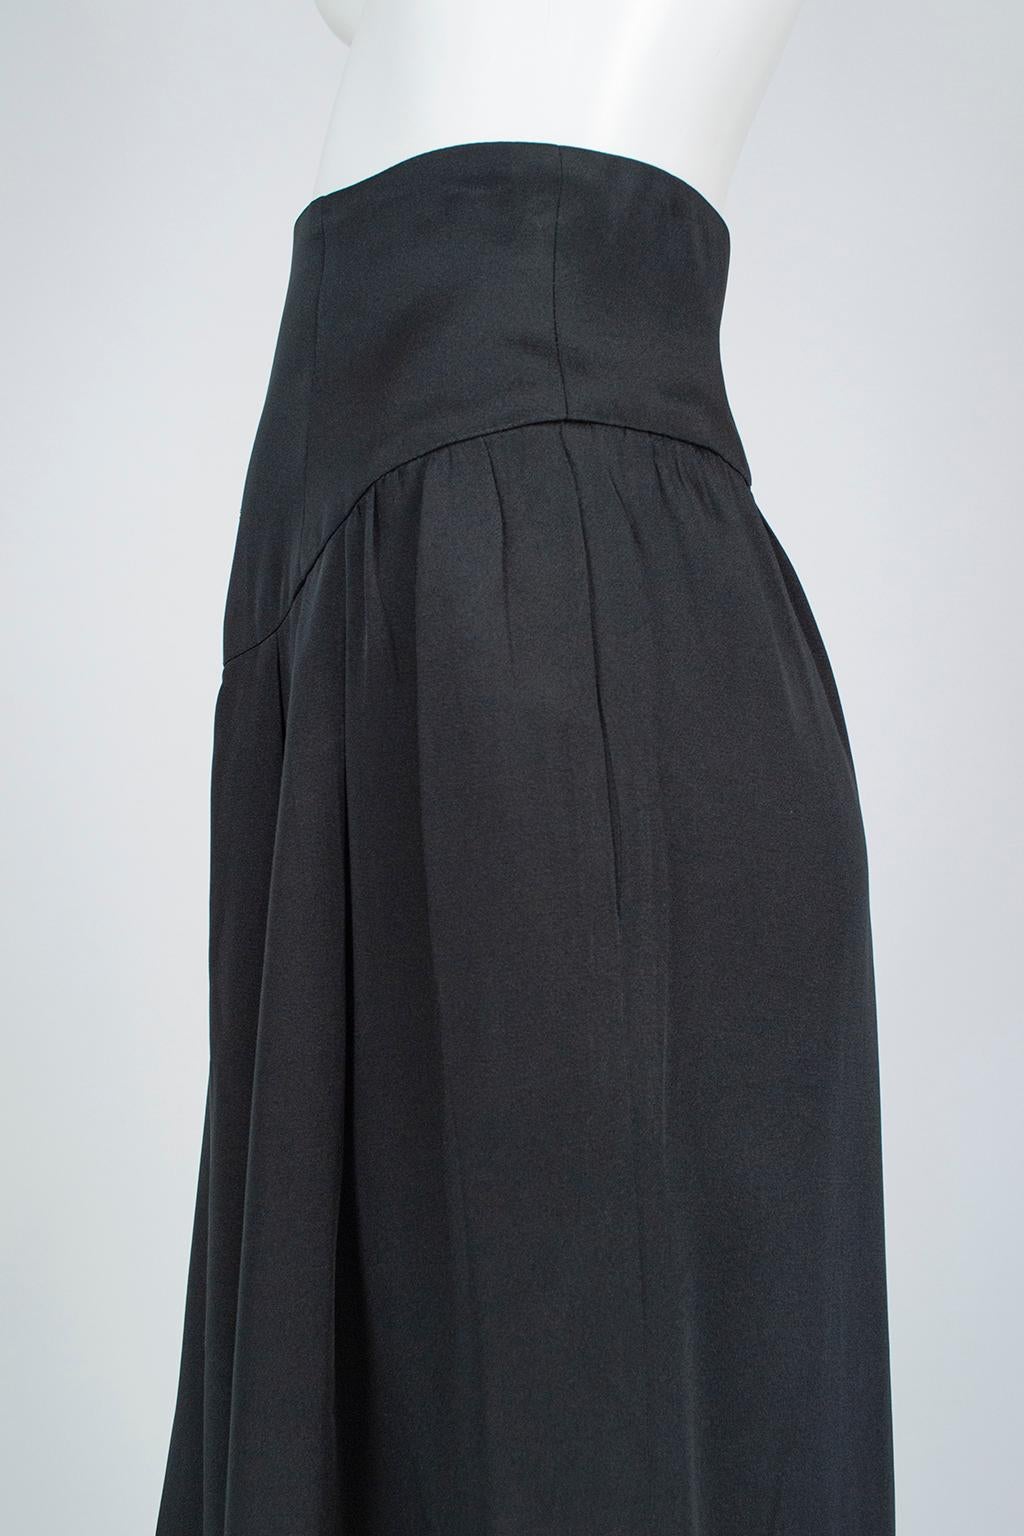 Black Silk Wide Leg Culottes with Cummerbund Girdle Waist – Medium, 1980s 2